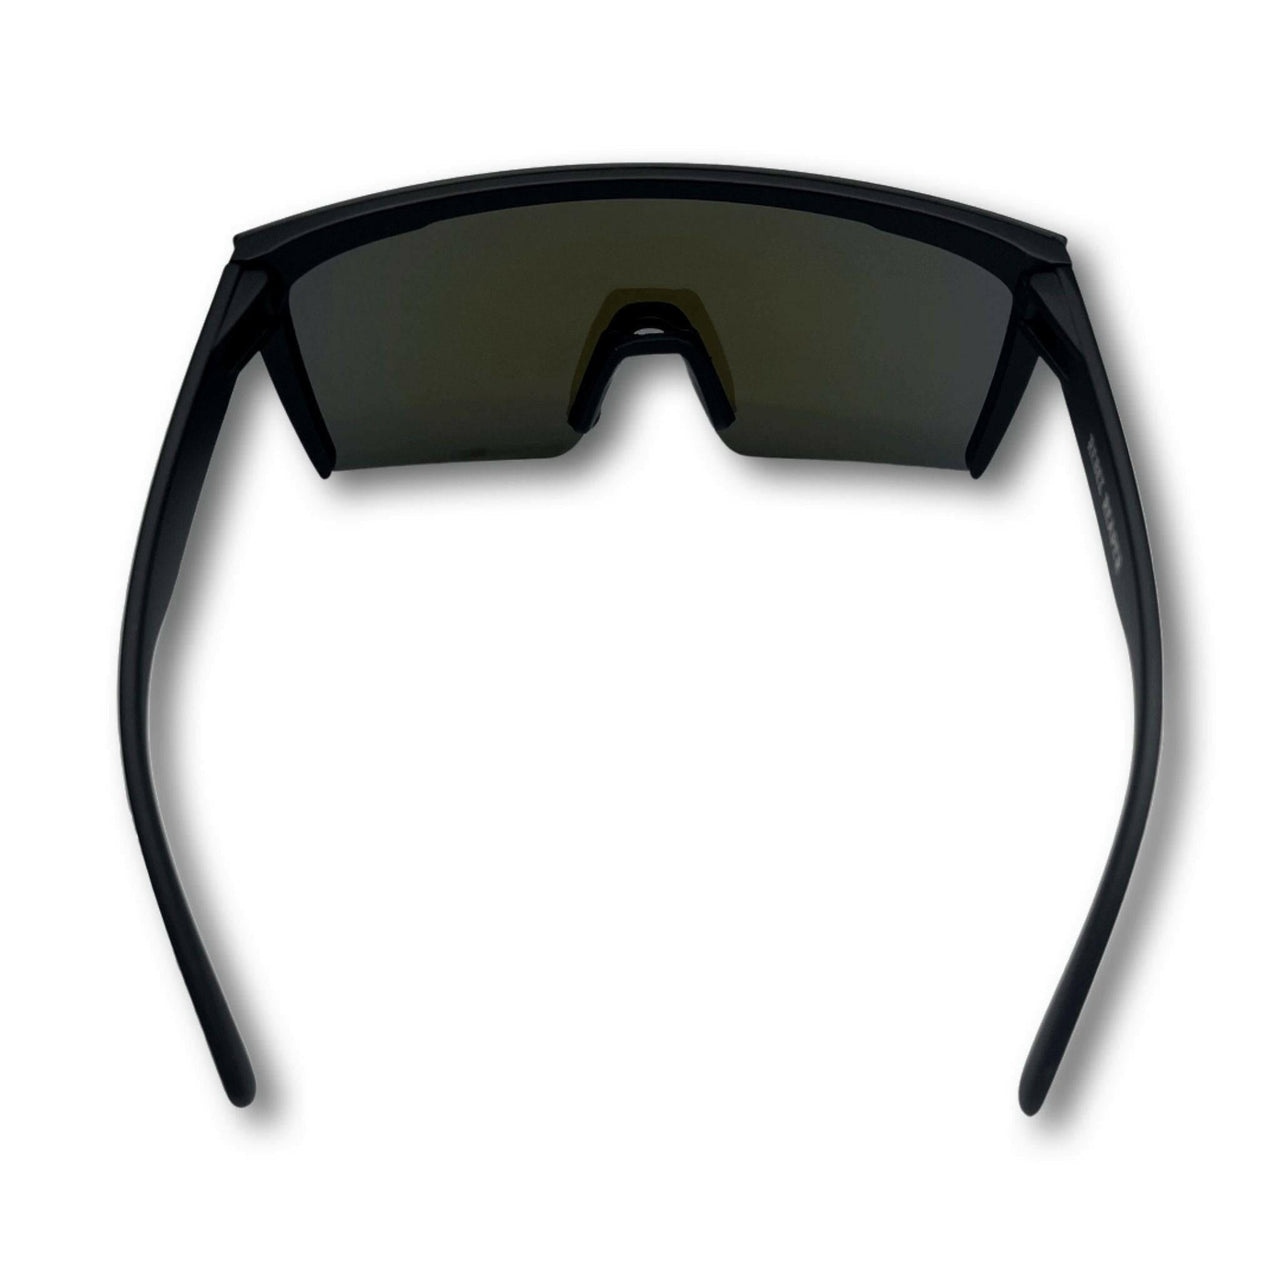 Hogans Blue Mirror Polarized Lens Sunglasses